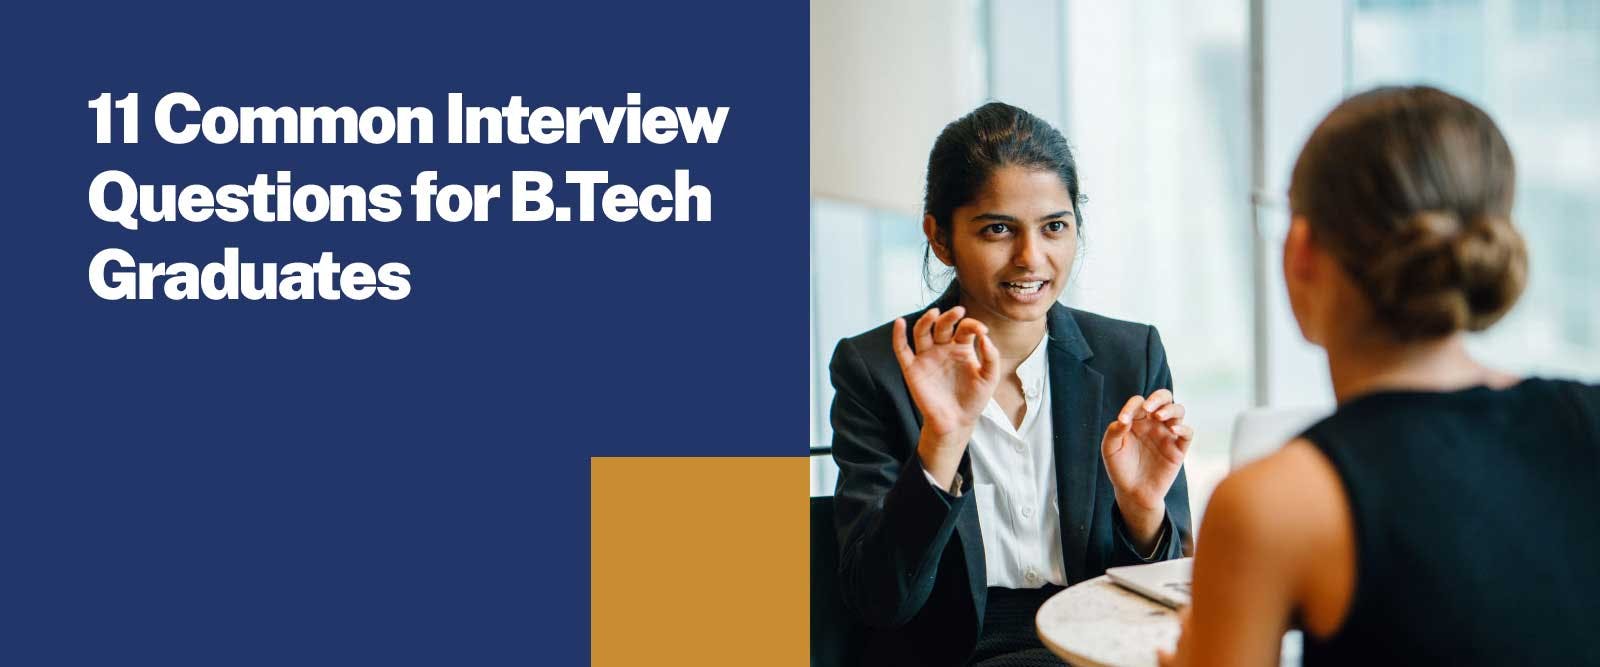 11 Common Interview Questions for B.Tech Graduates